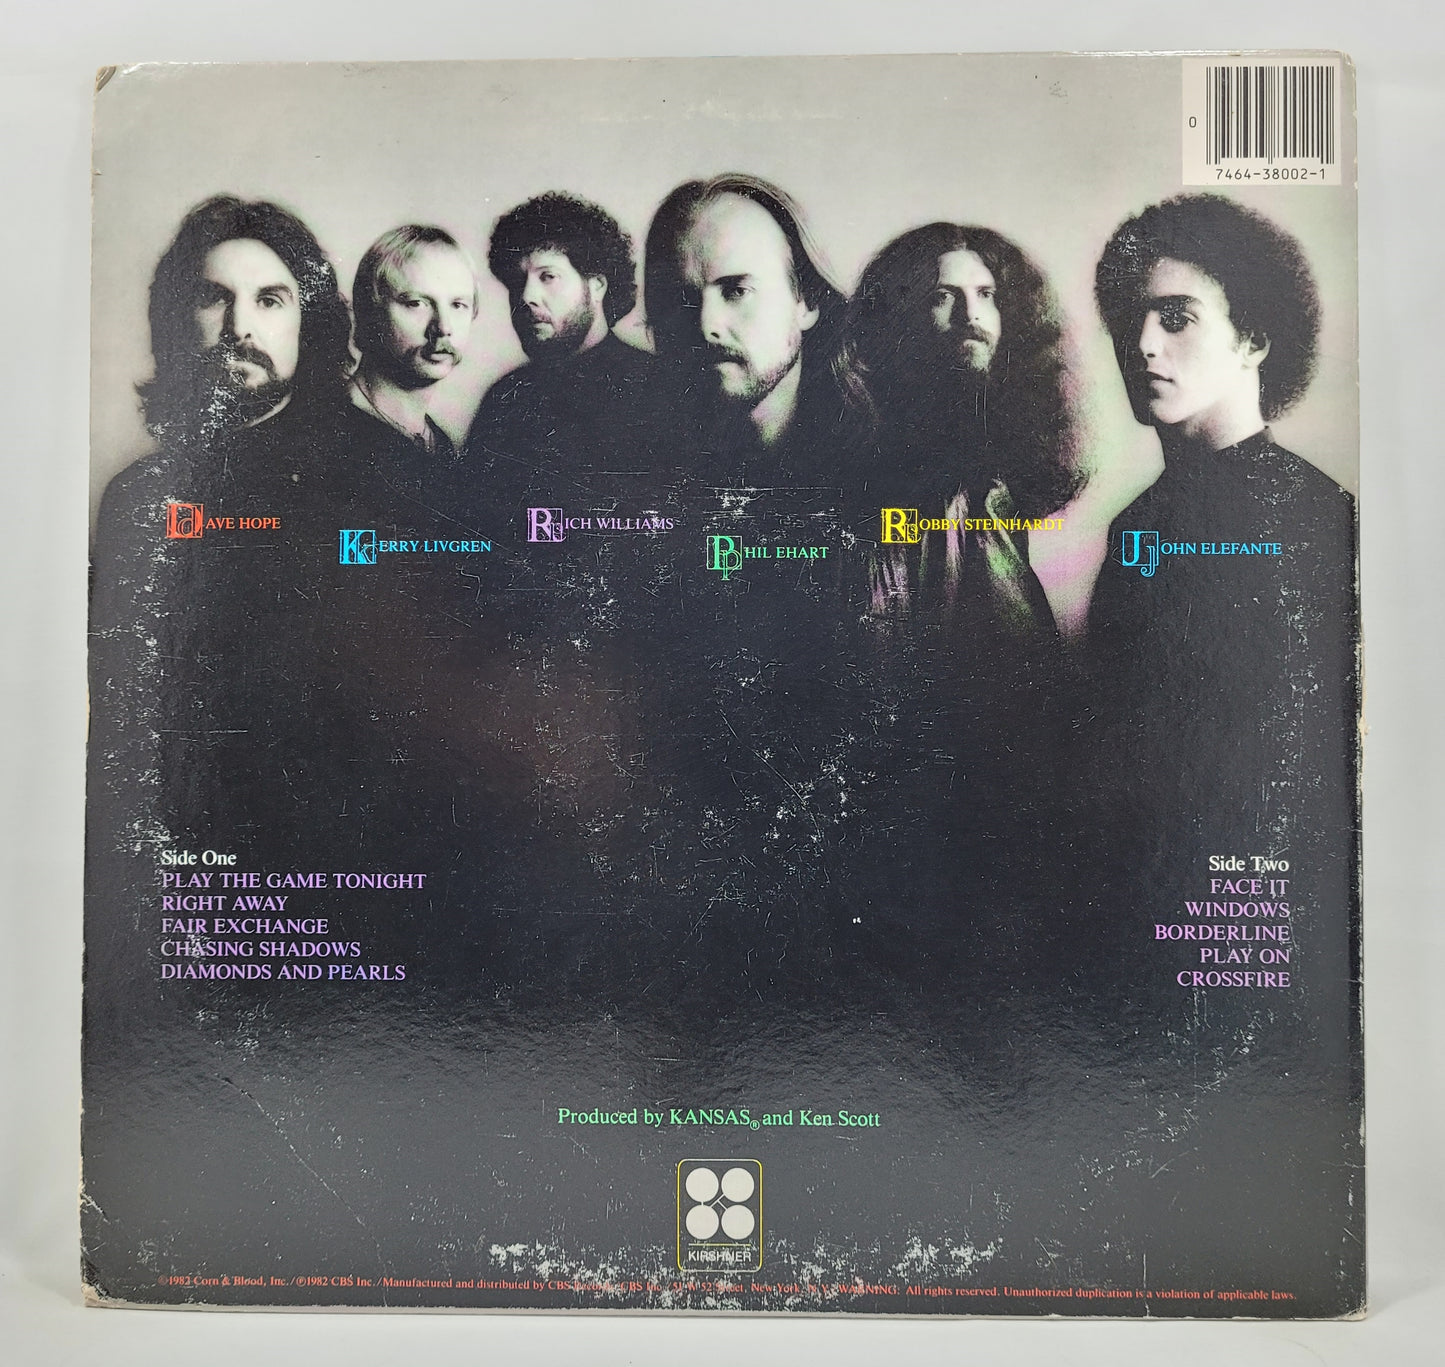 Kansas - Vinyl Confessions [1982 Carrollton Pressing] [Used Vinyl Record LP] [C]